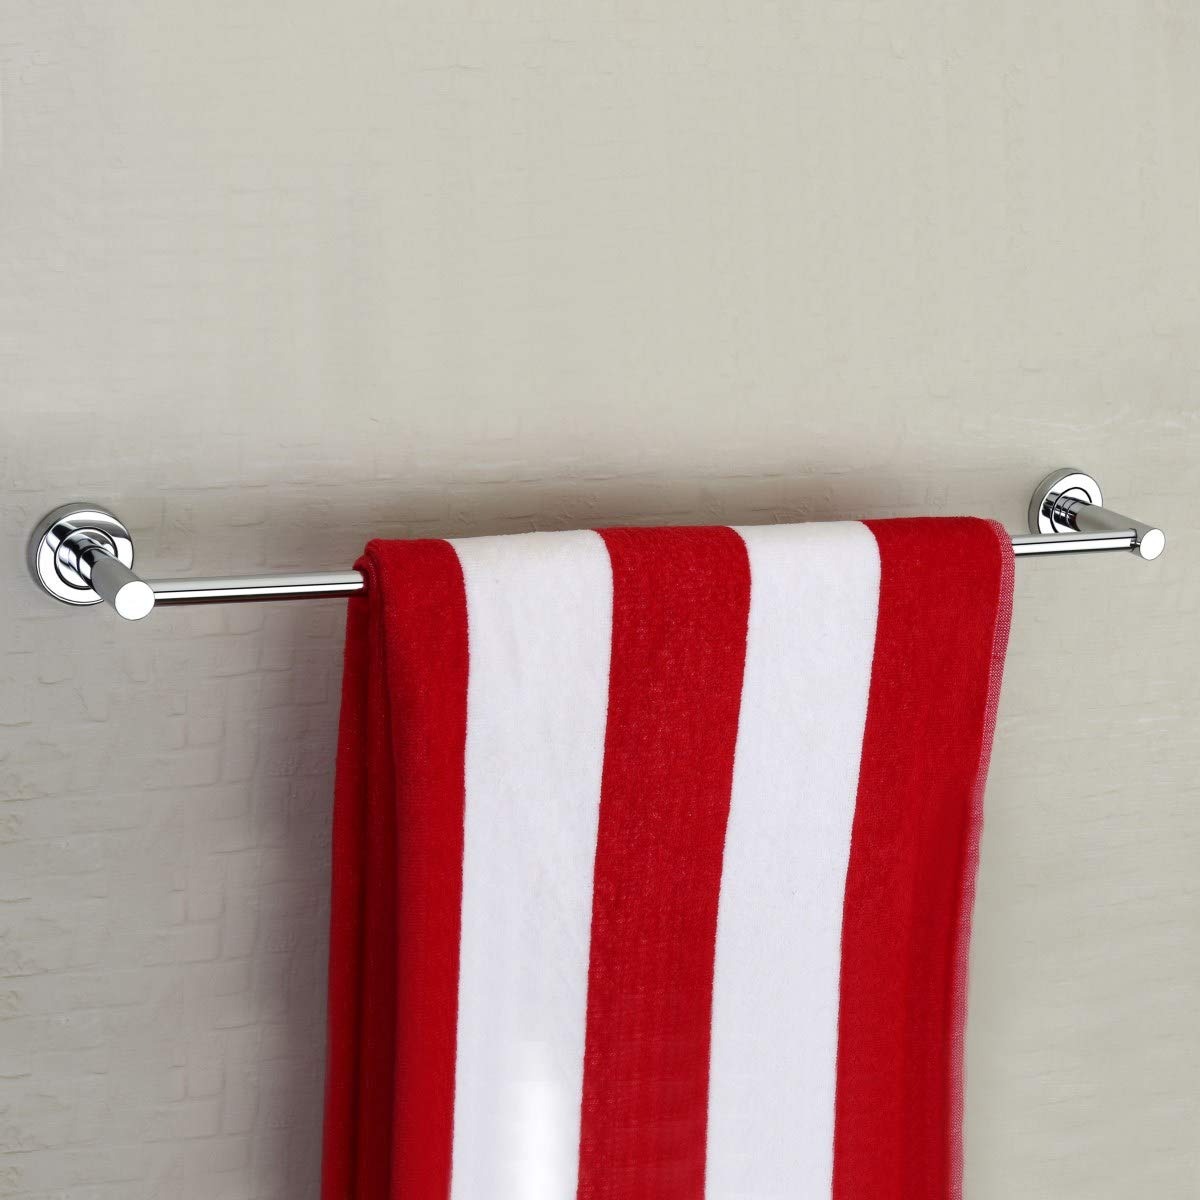 Plantex Stainless Steel Heavy Towel Rod/Towel Rack for Bathroom/Towel Bar/Hanger/Stand/Bathroom Accessories (24 Inch - Chrome Finish)